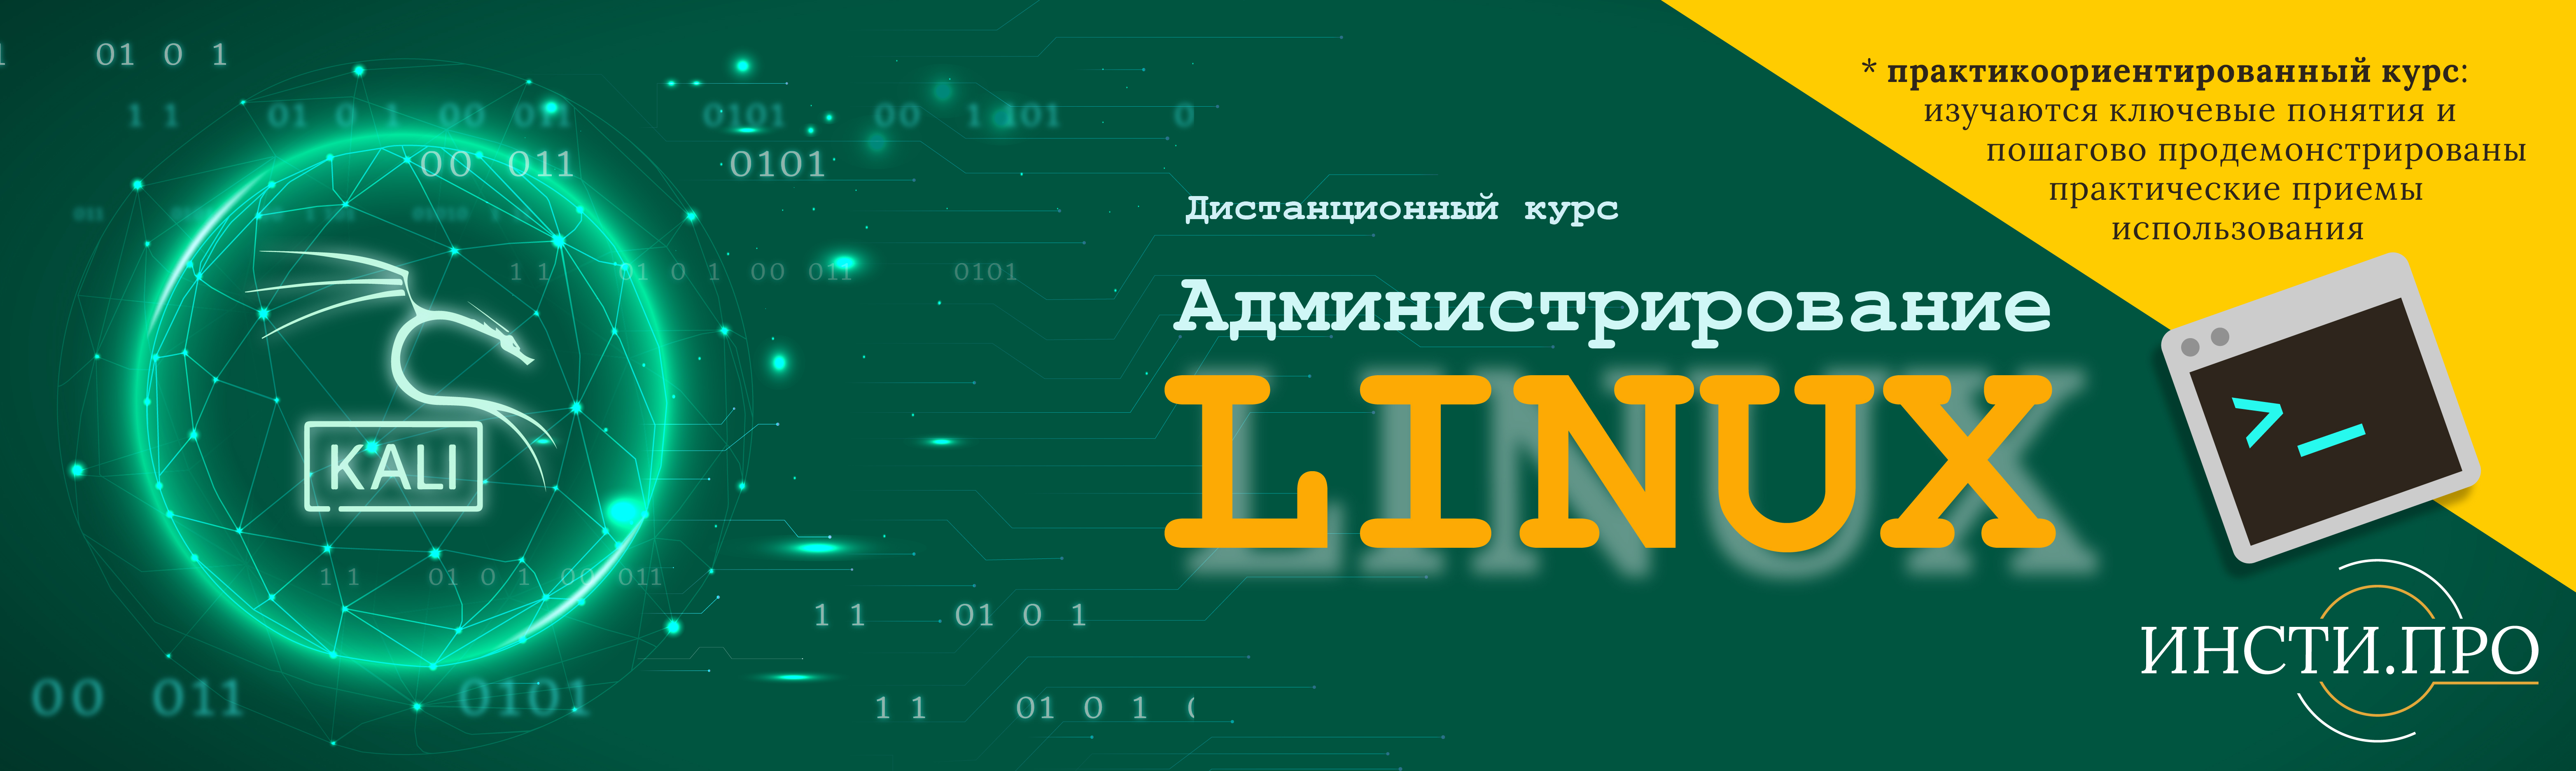 administrirovanie_linux_szckzi.jpg